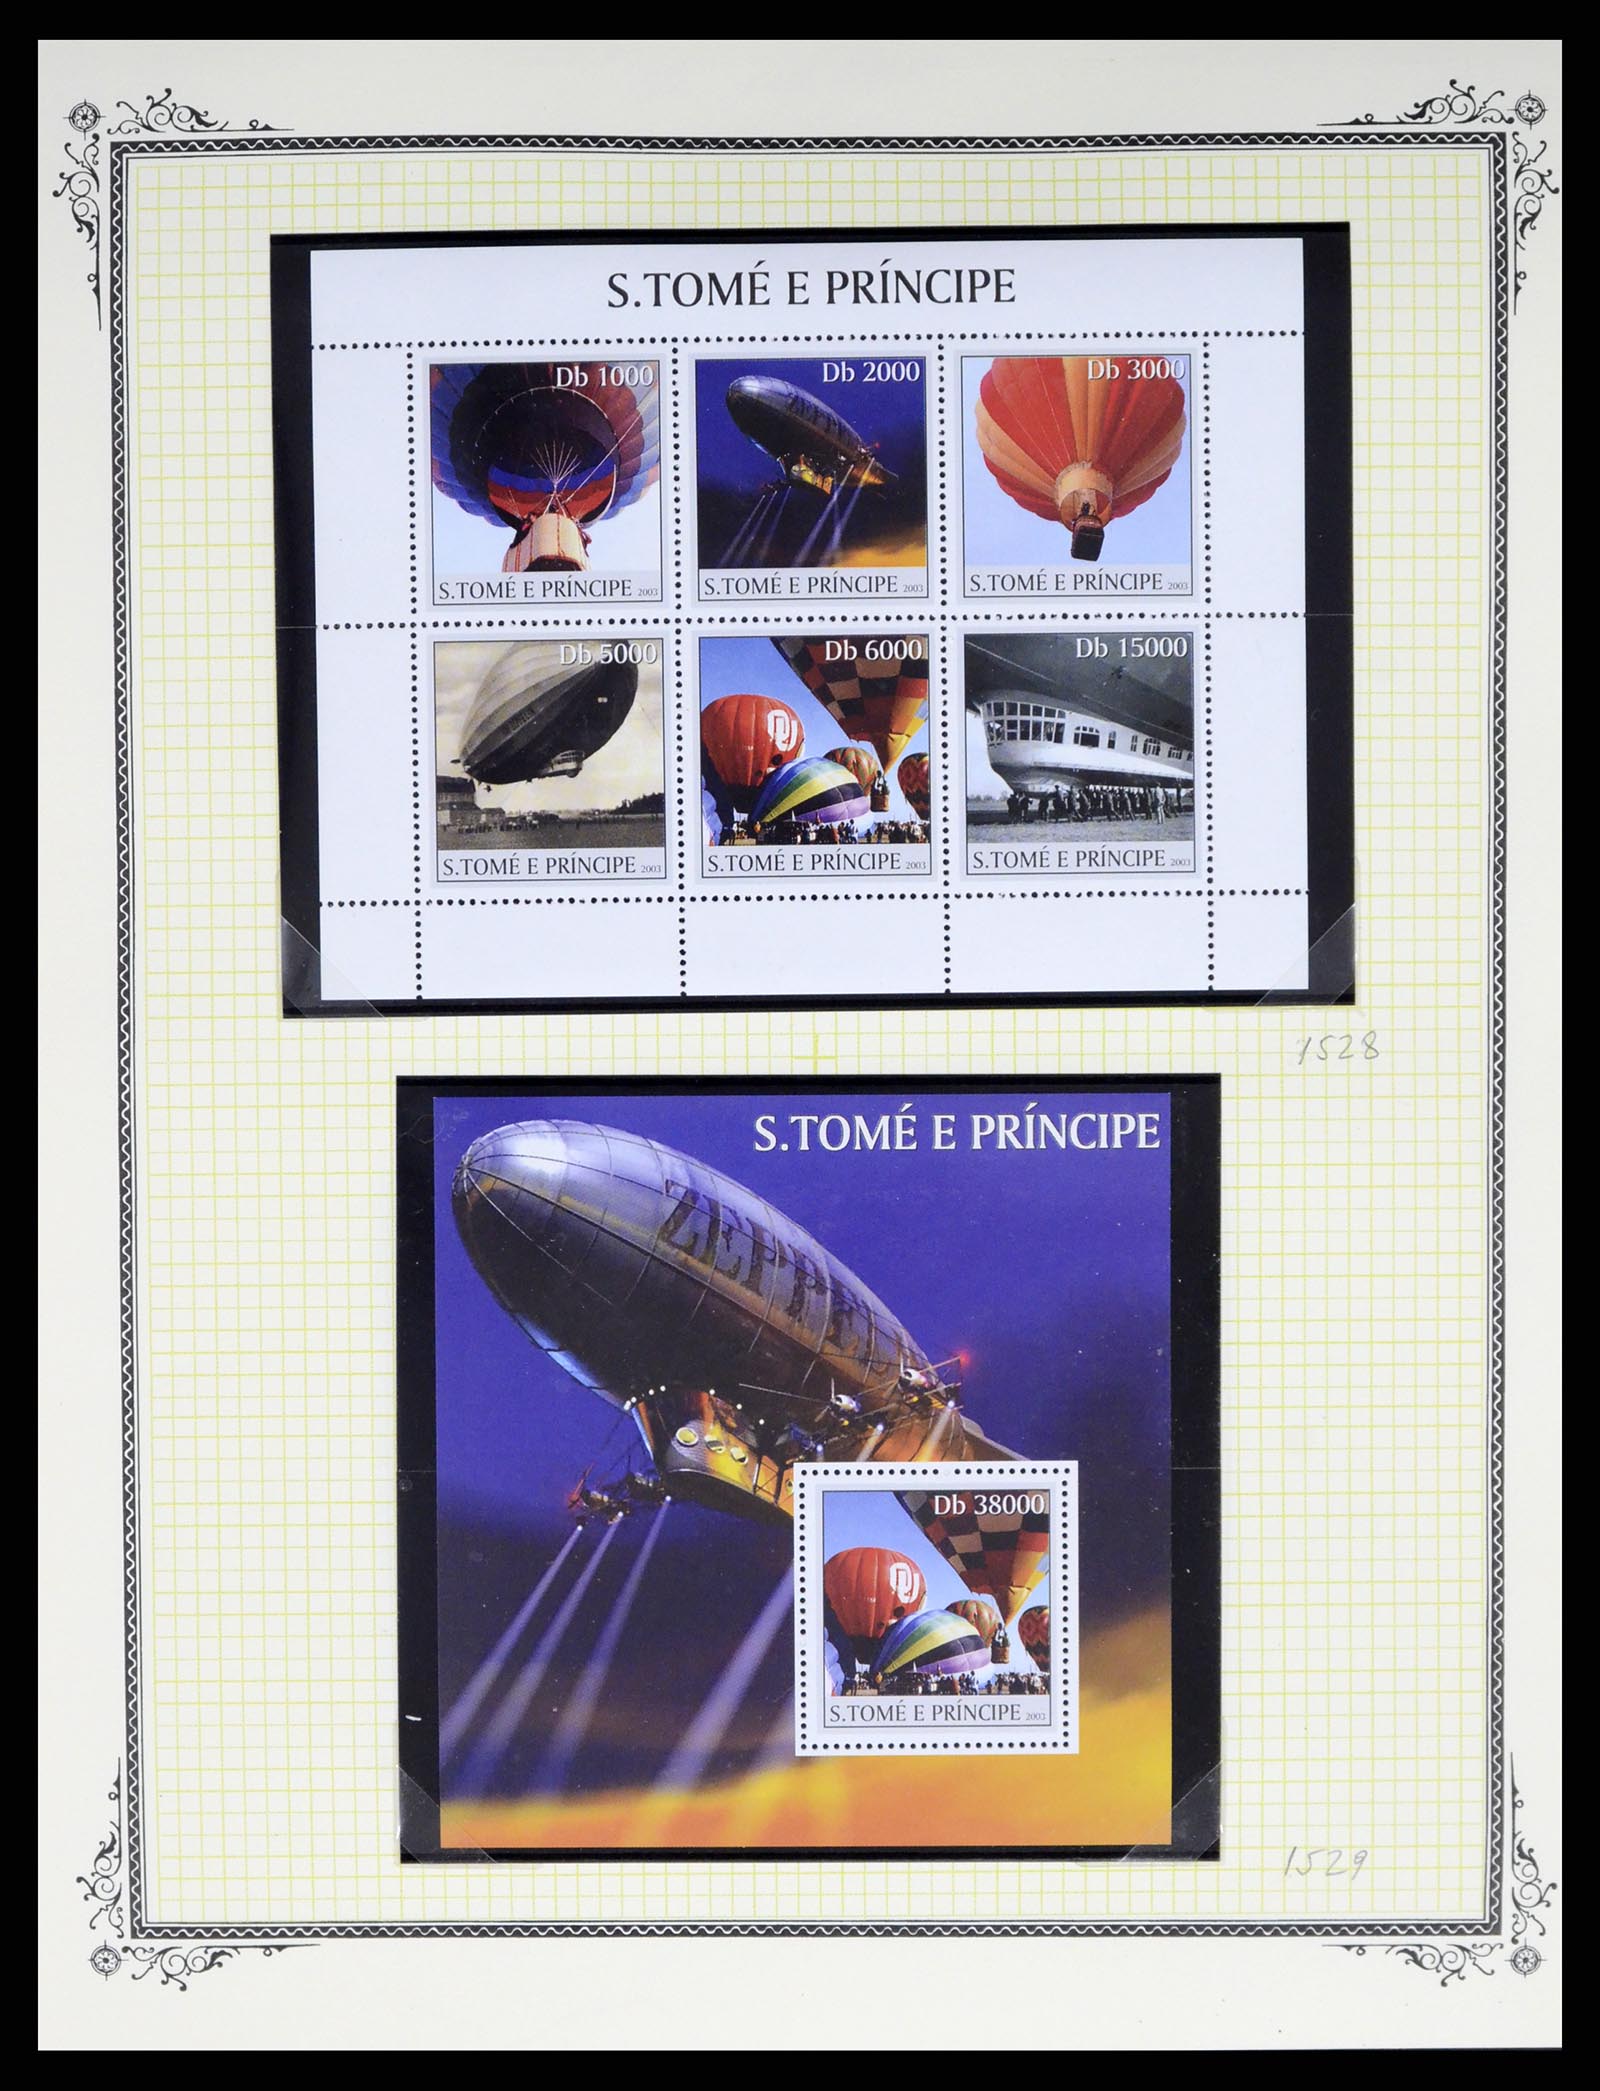 37728 290 - Postzegelverzameling 37728 Motief luchtpost 1930-2000.